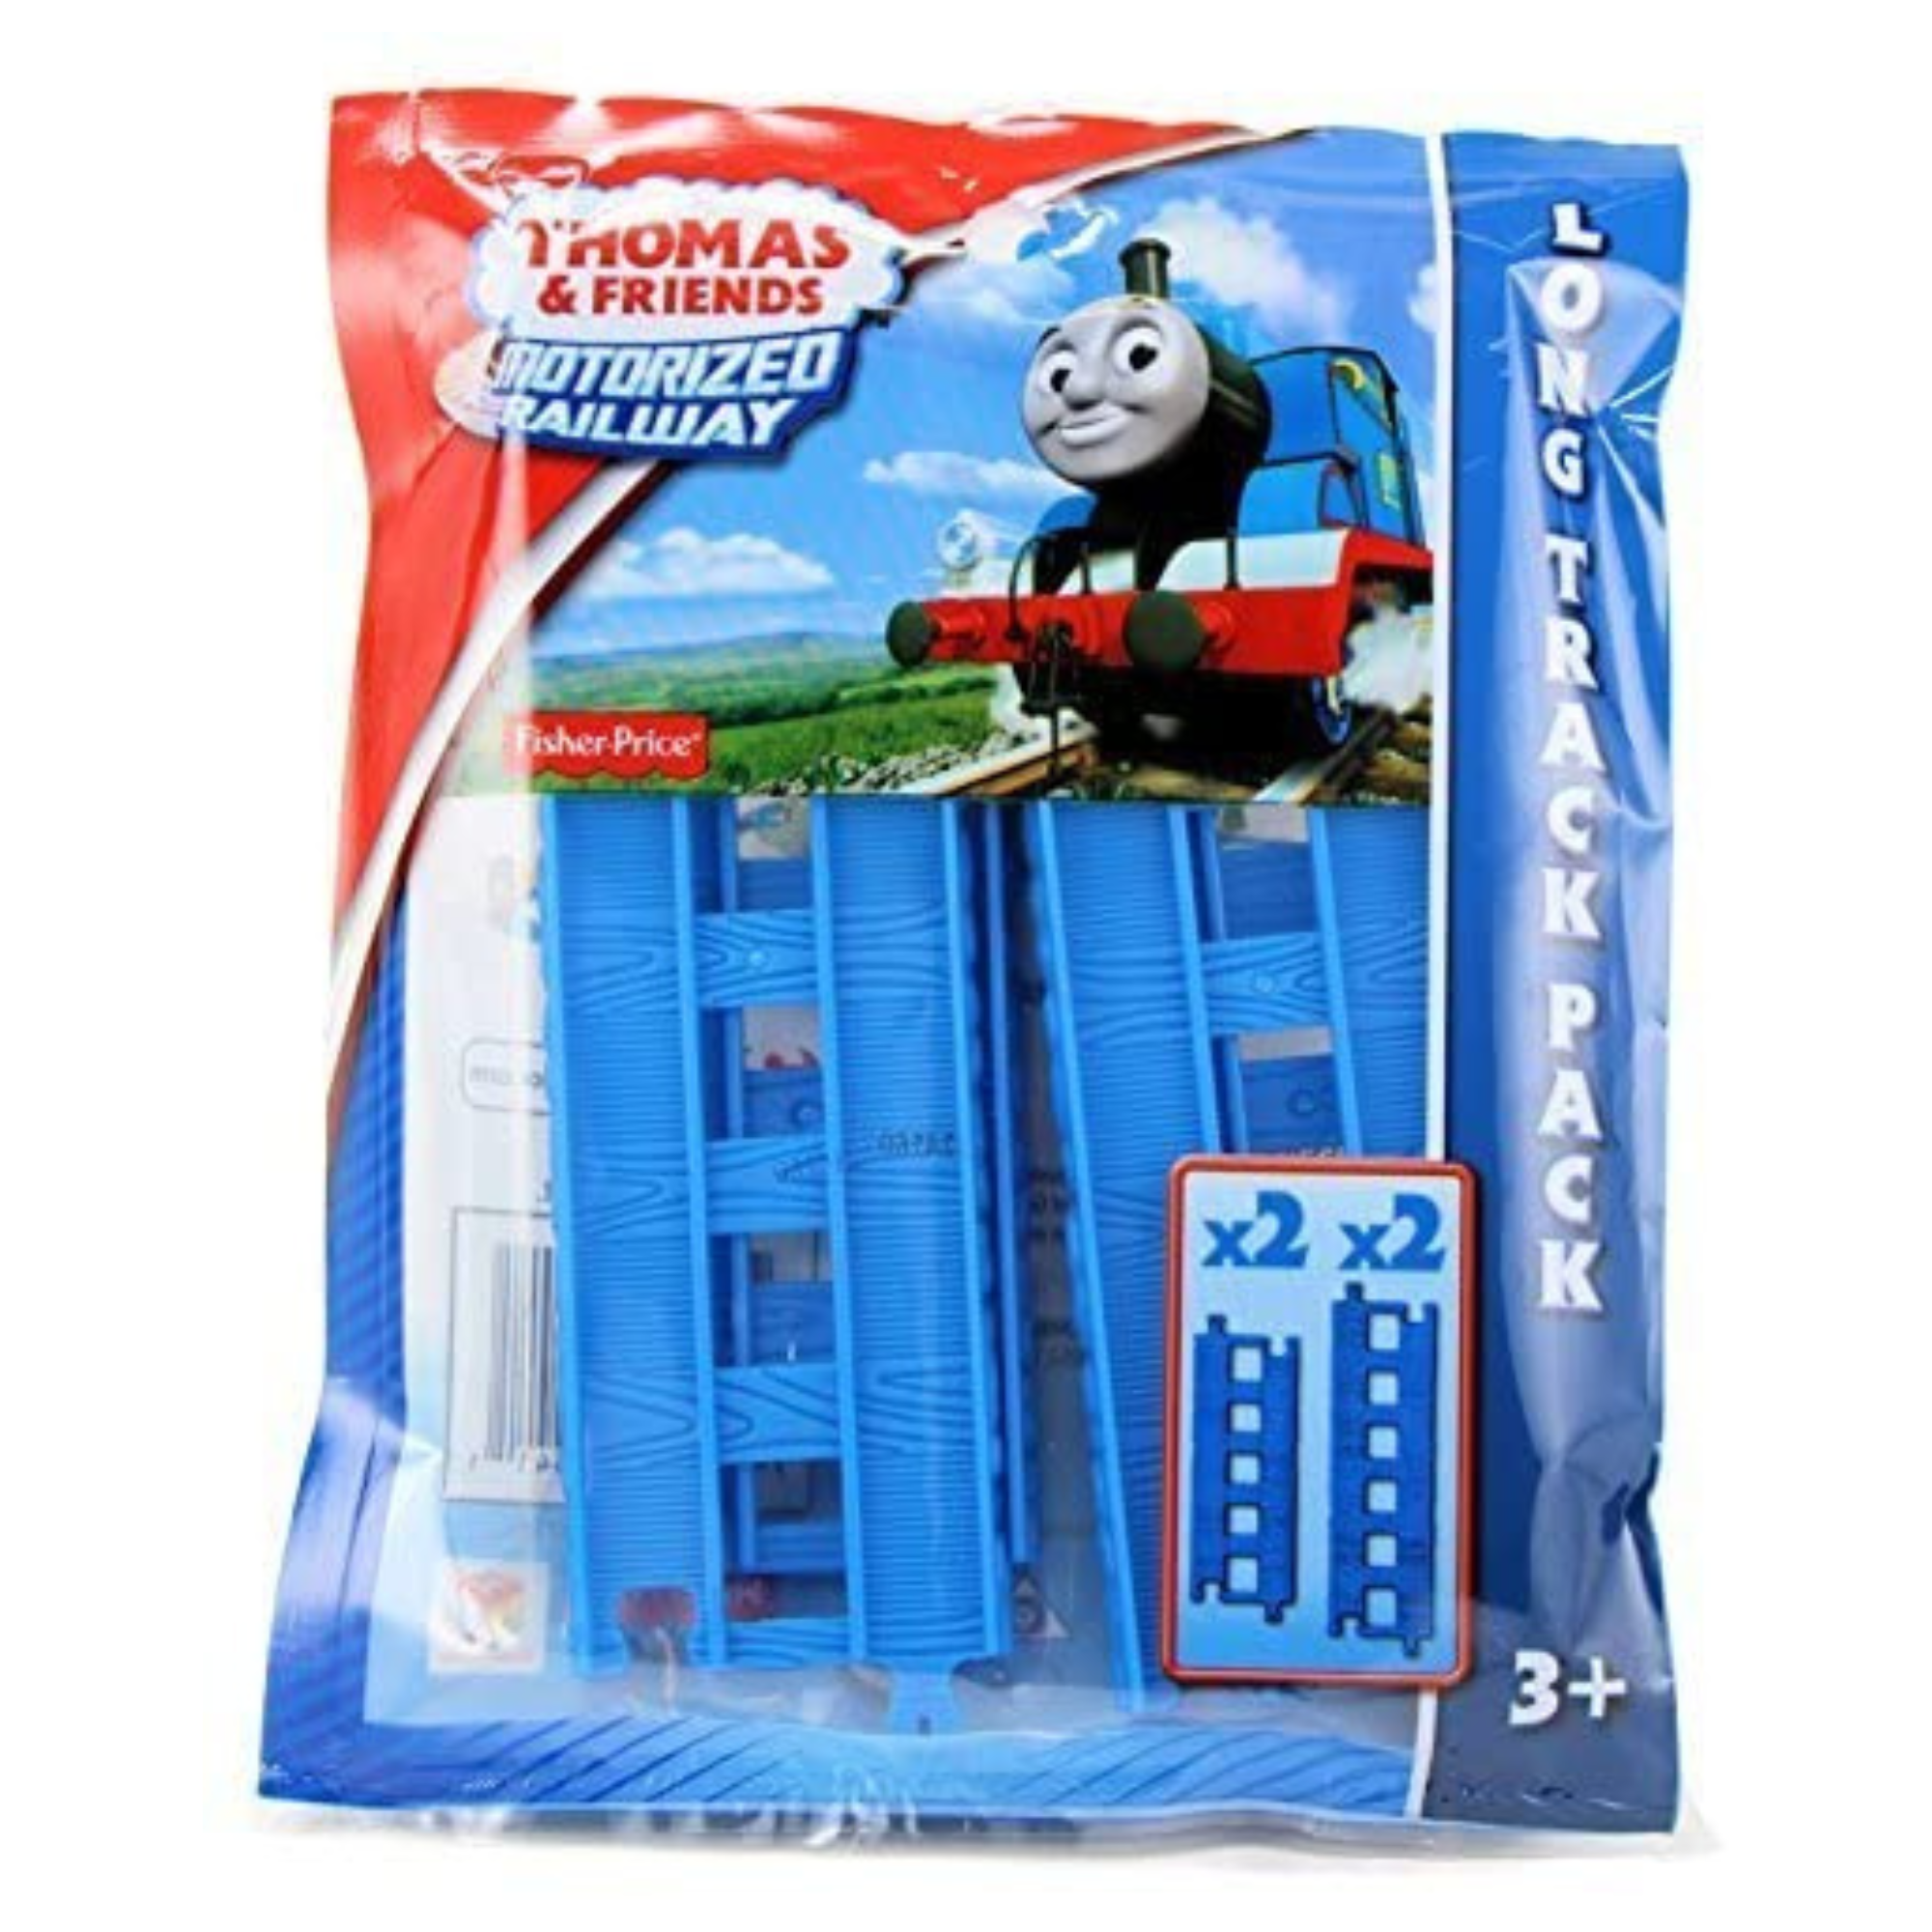 Thomas & Friends Fisher Price Motorised Railway Long Track Pack (4 pieces) - Toptoys2u